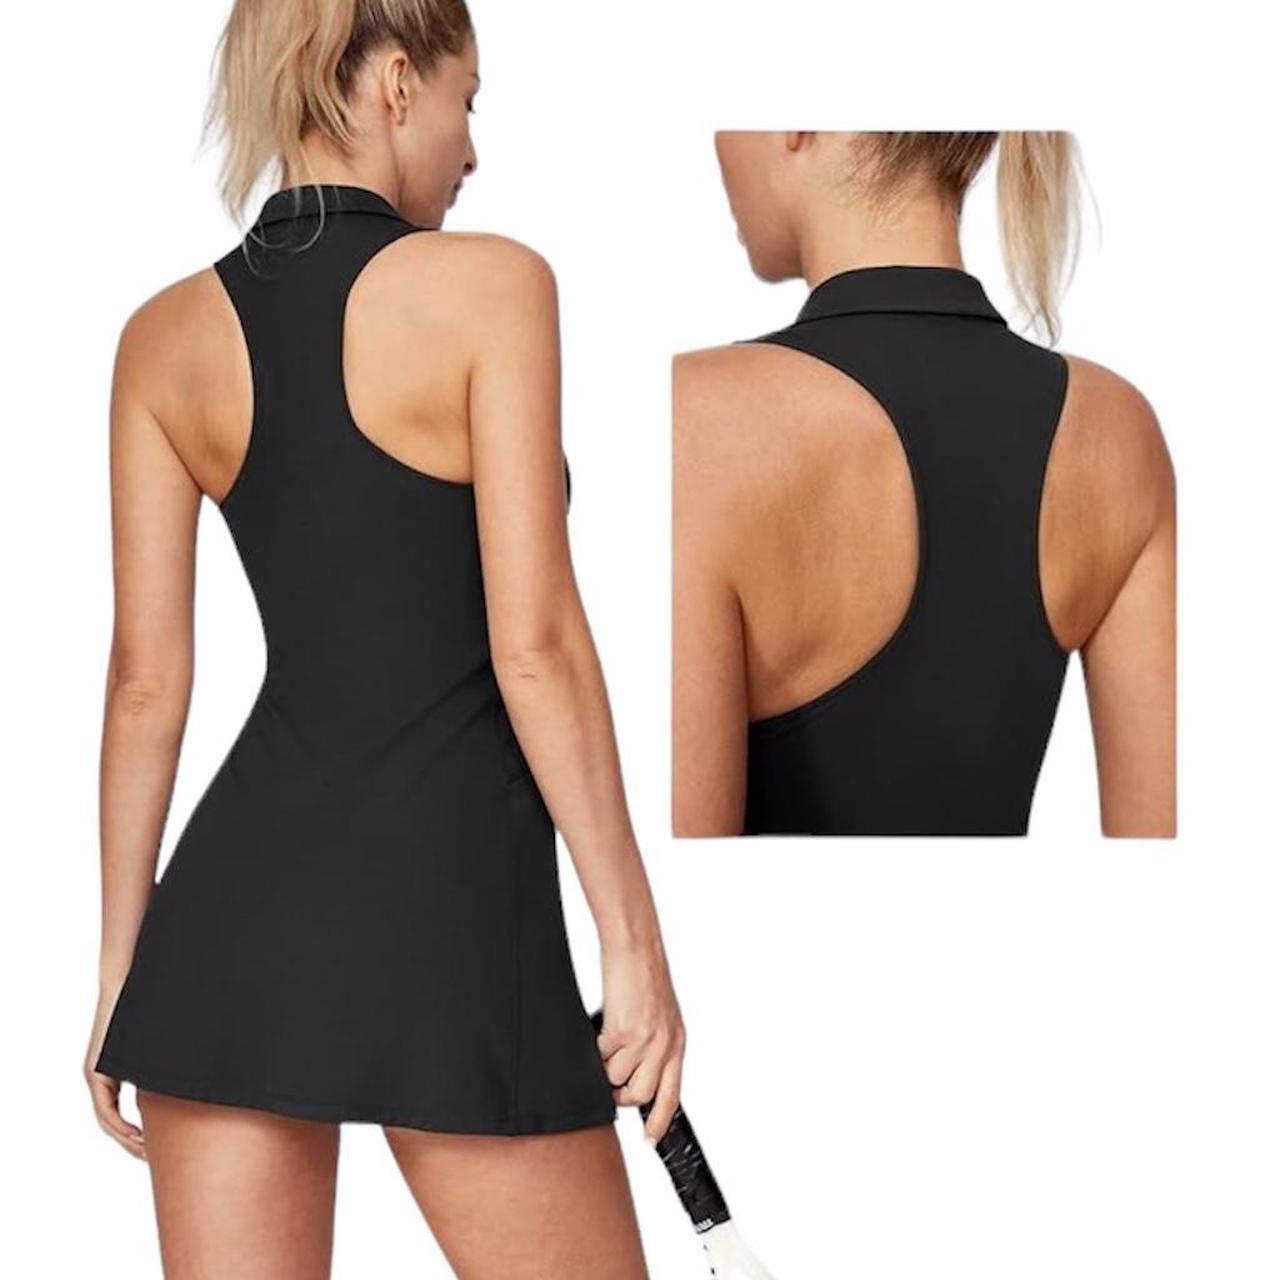  IUGA Womens Tennis Dress with Built in Shorts & Bra